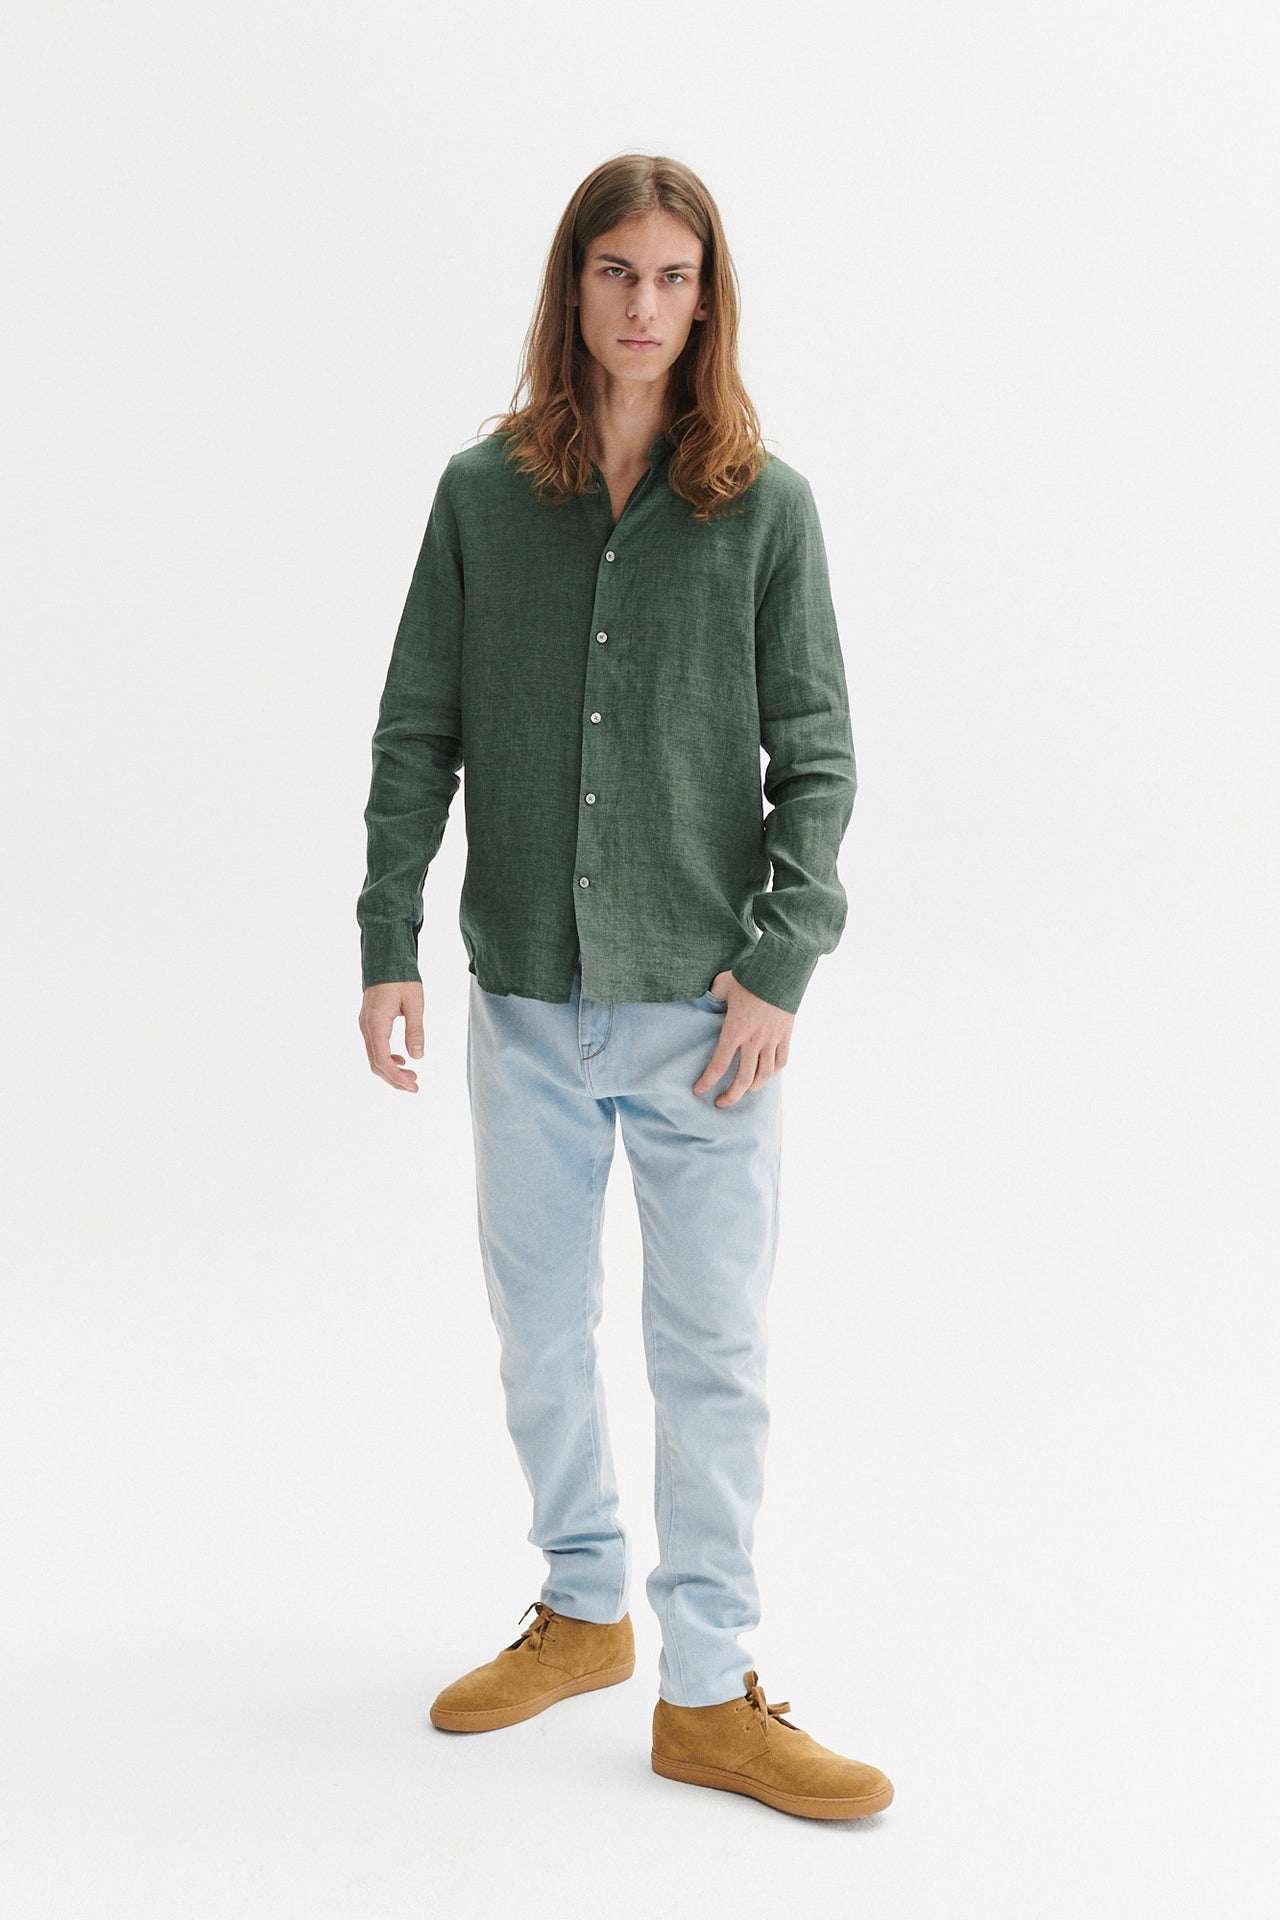 Feel Good Shirt in a Green Italian Woven Traceable European Linen